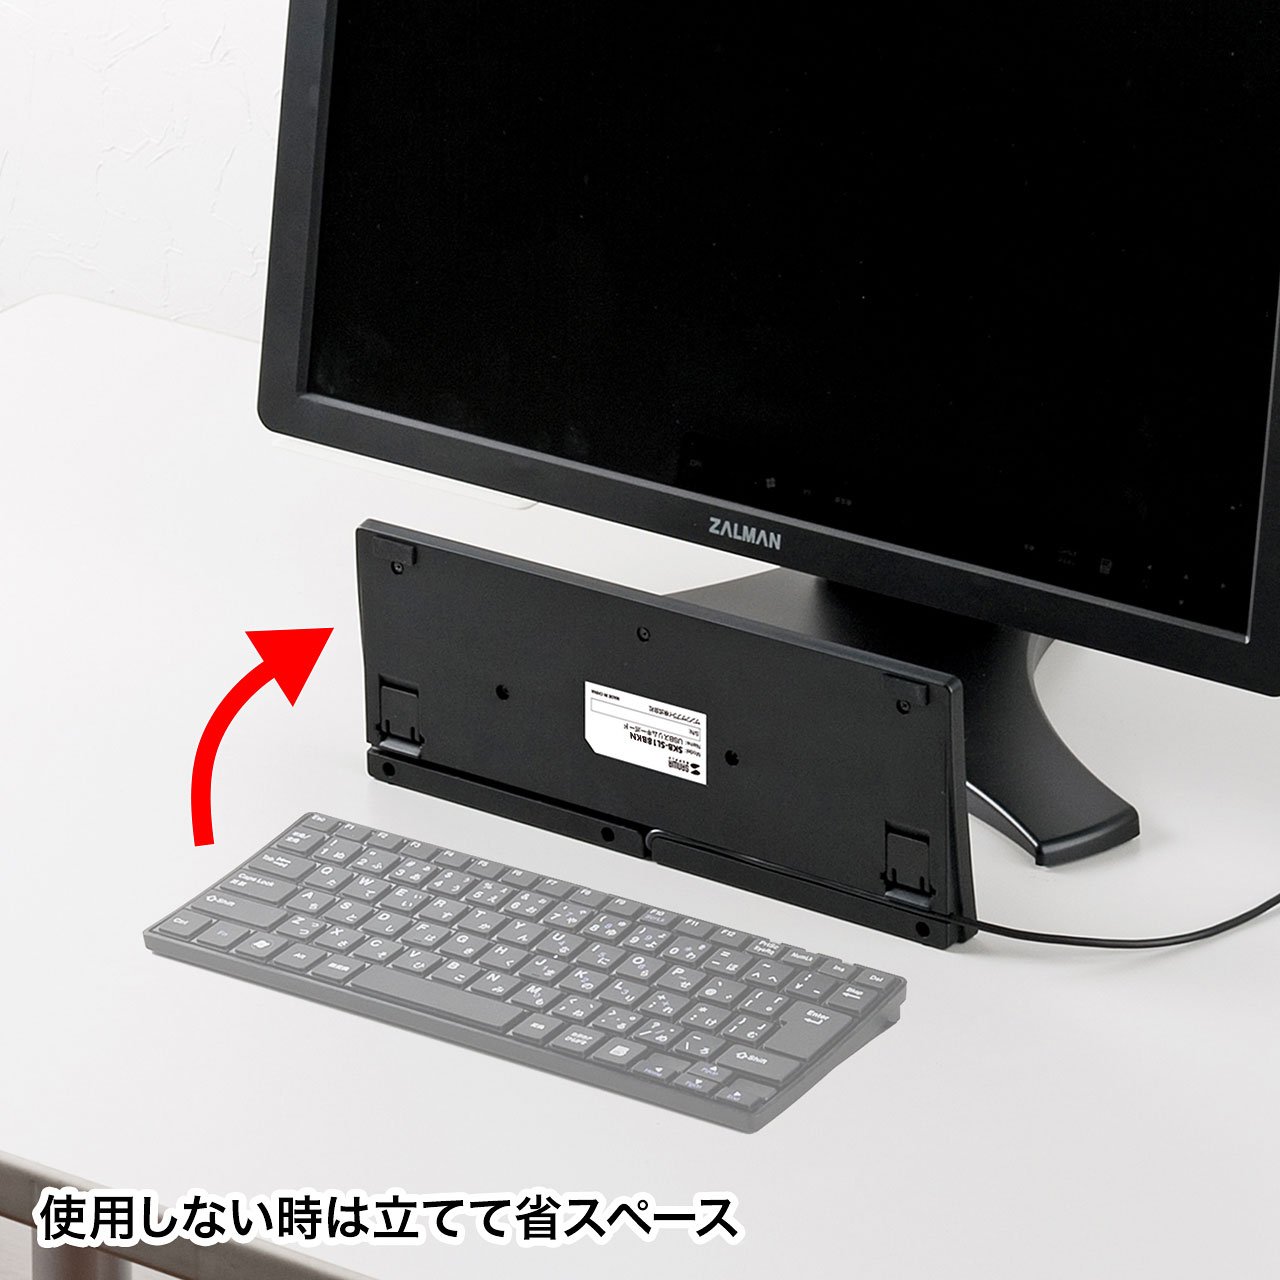 Sanwa Supply Tenkeyless USB Slim Keyboard, No Number Pad, SKB-SL18BKN, blk